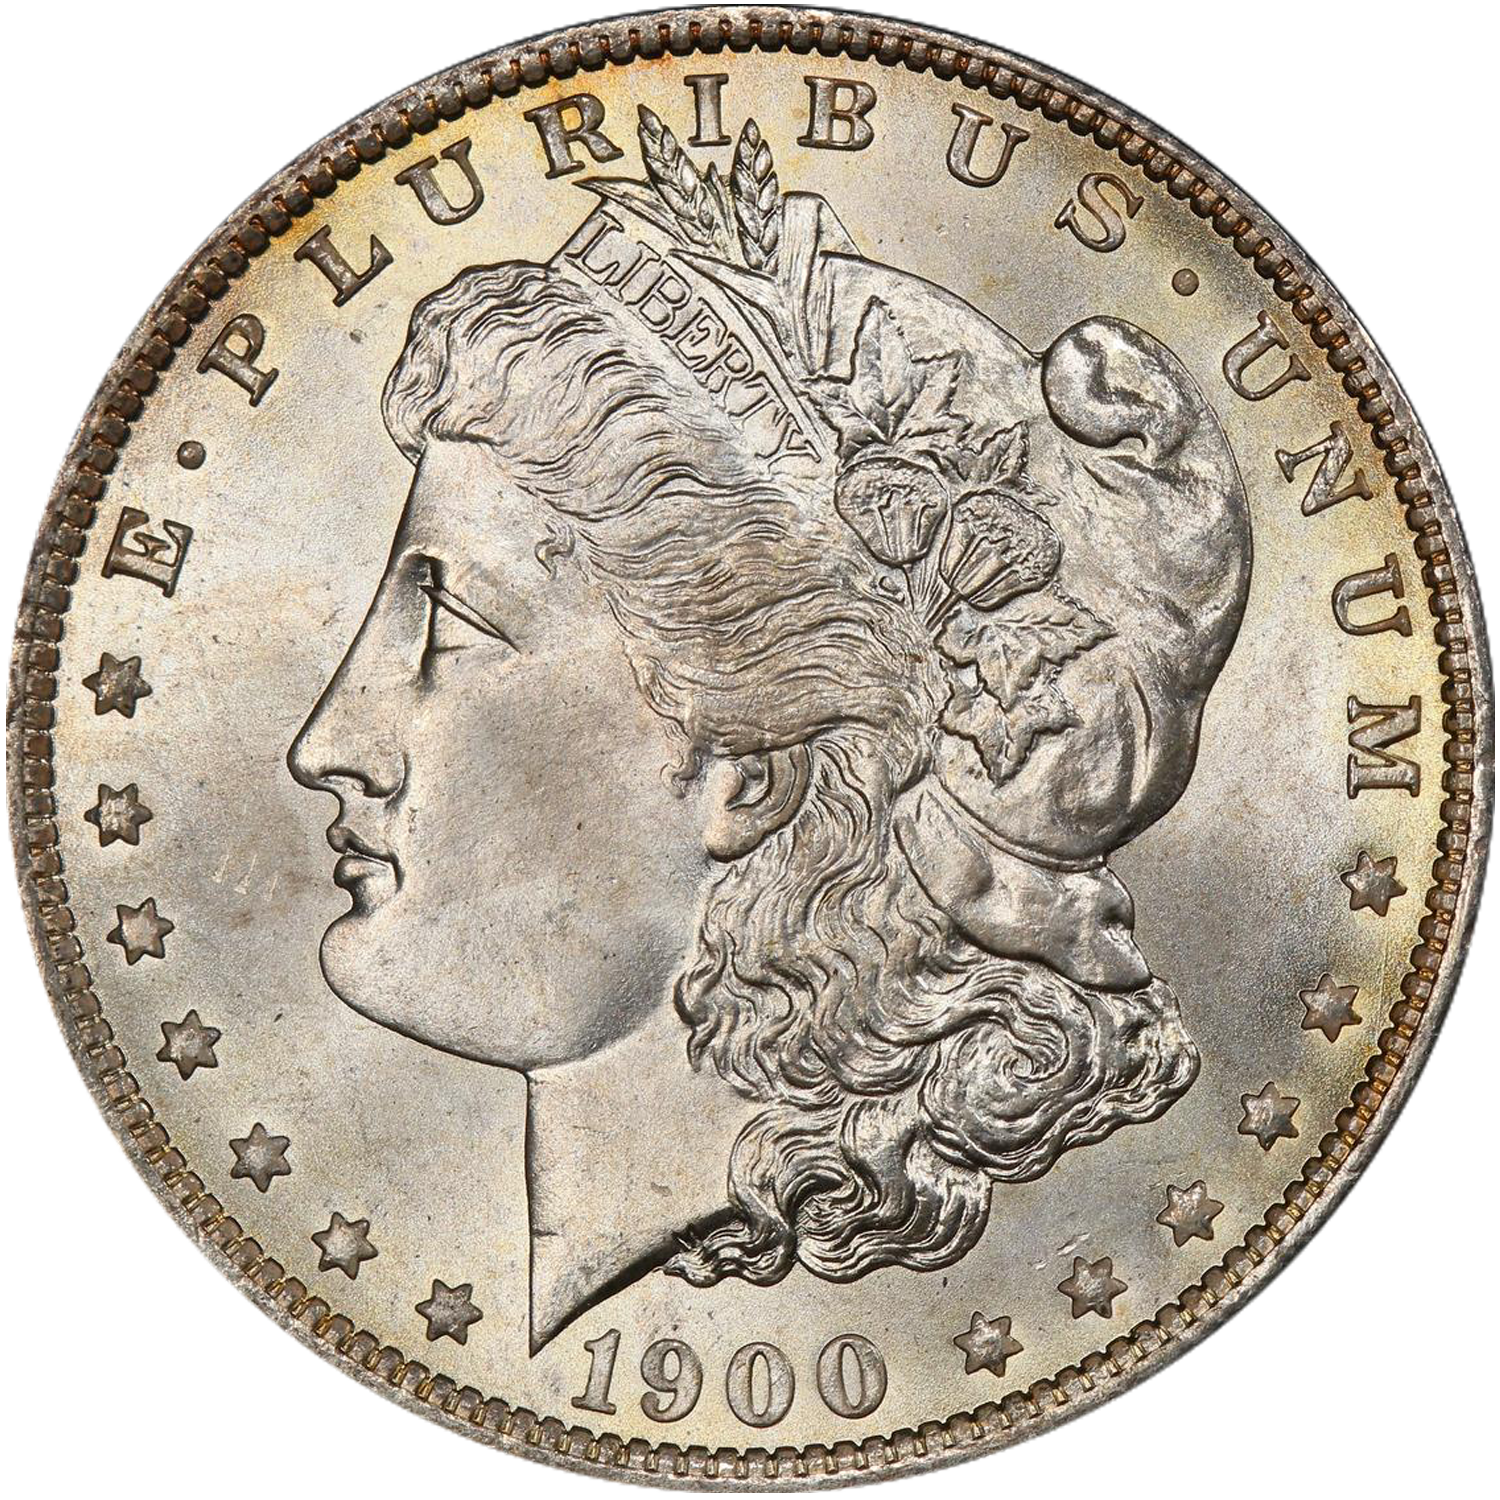 1900 new orleans over carson city mitnmark morgan silver dollar